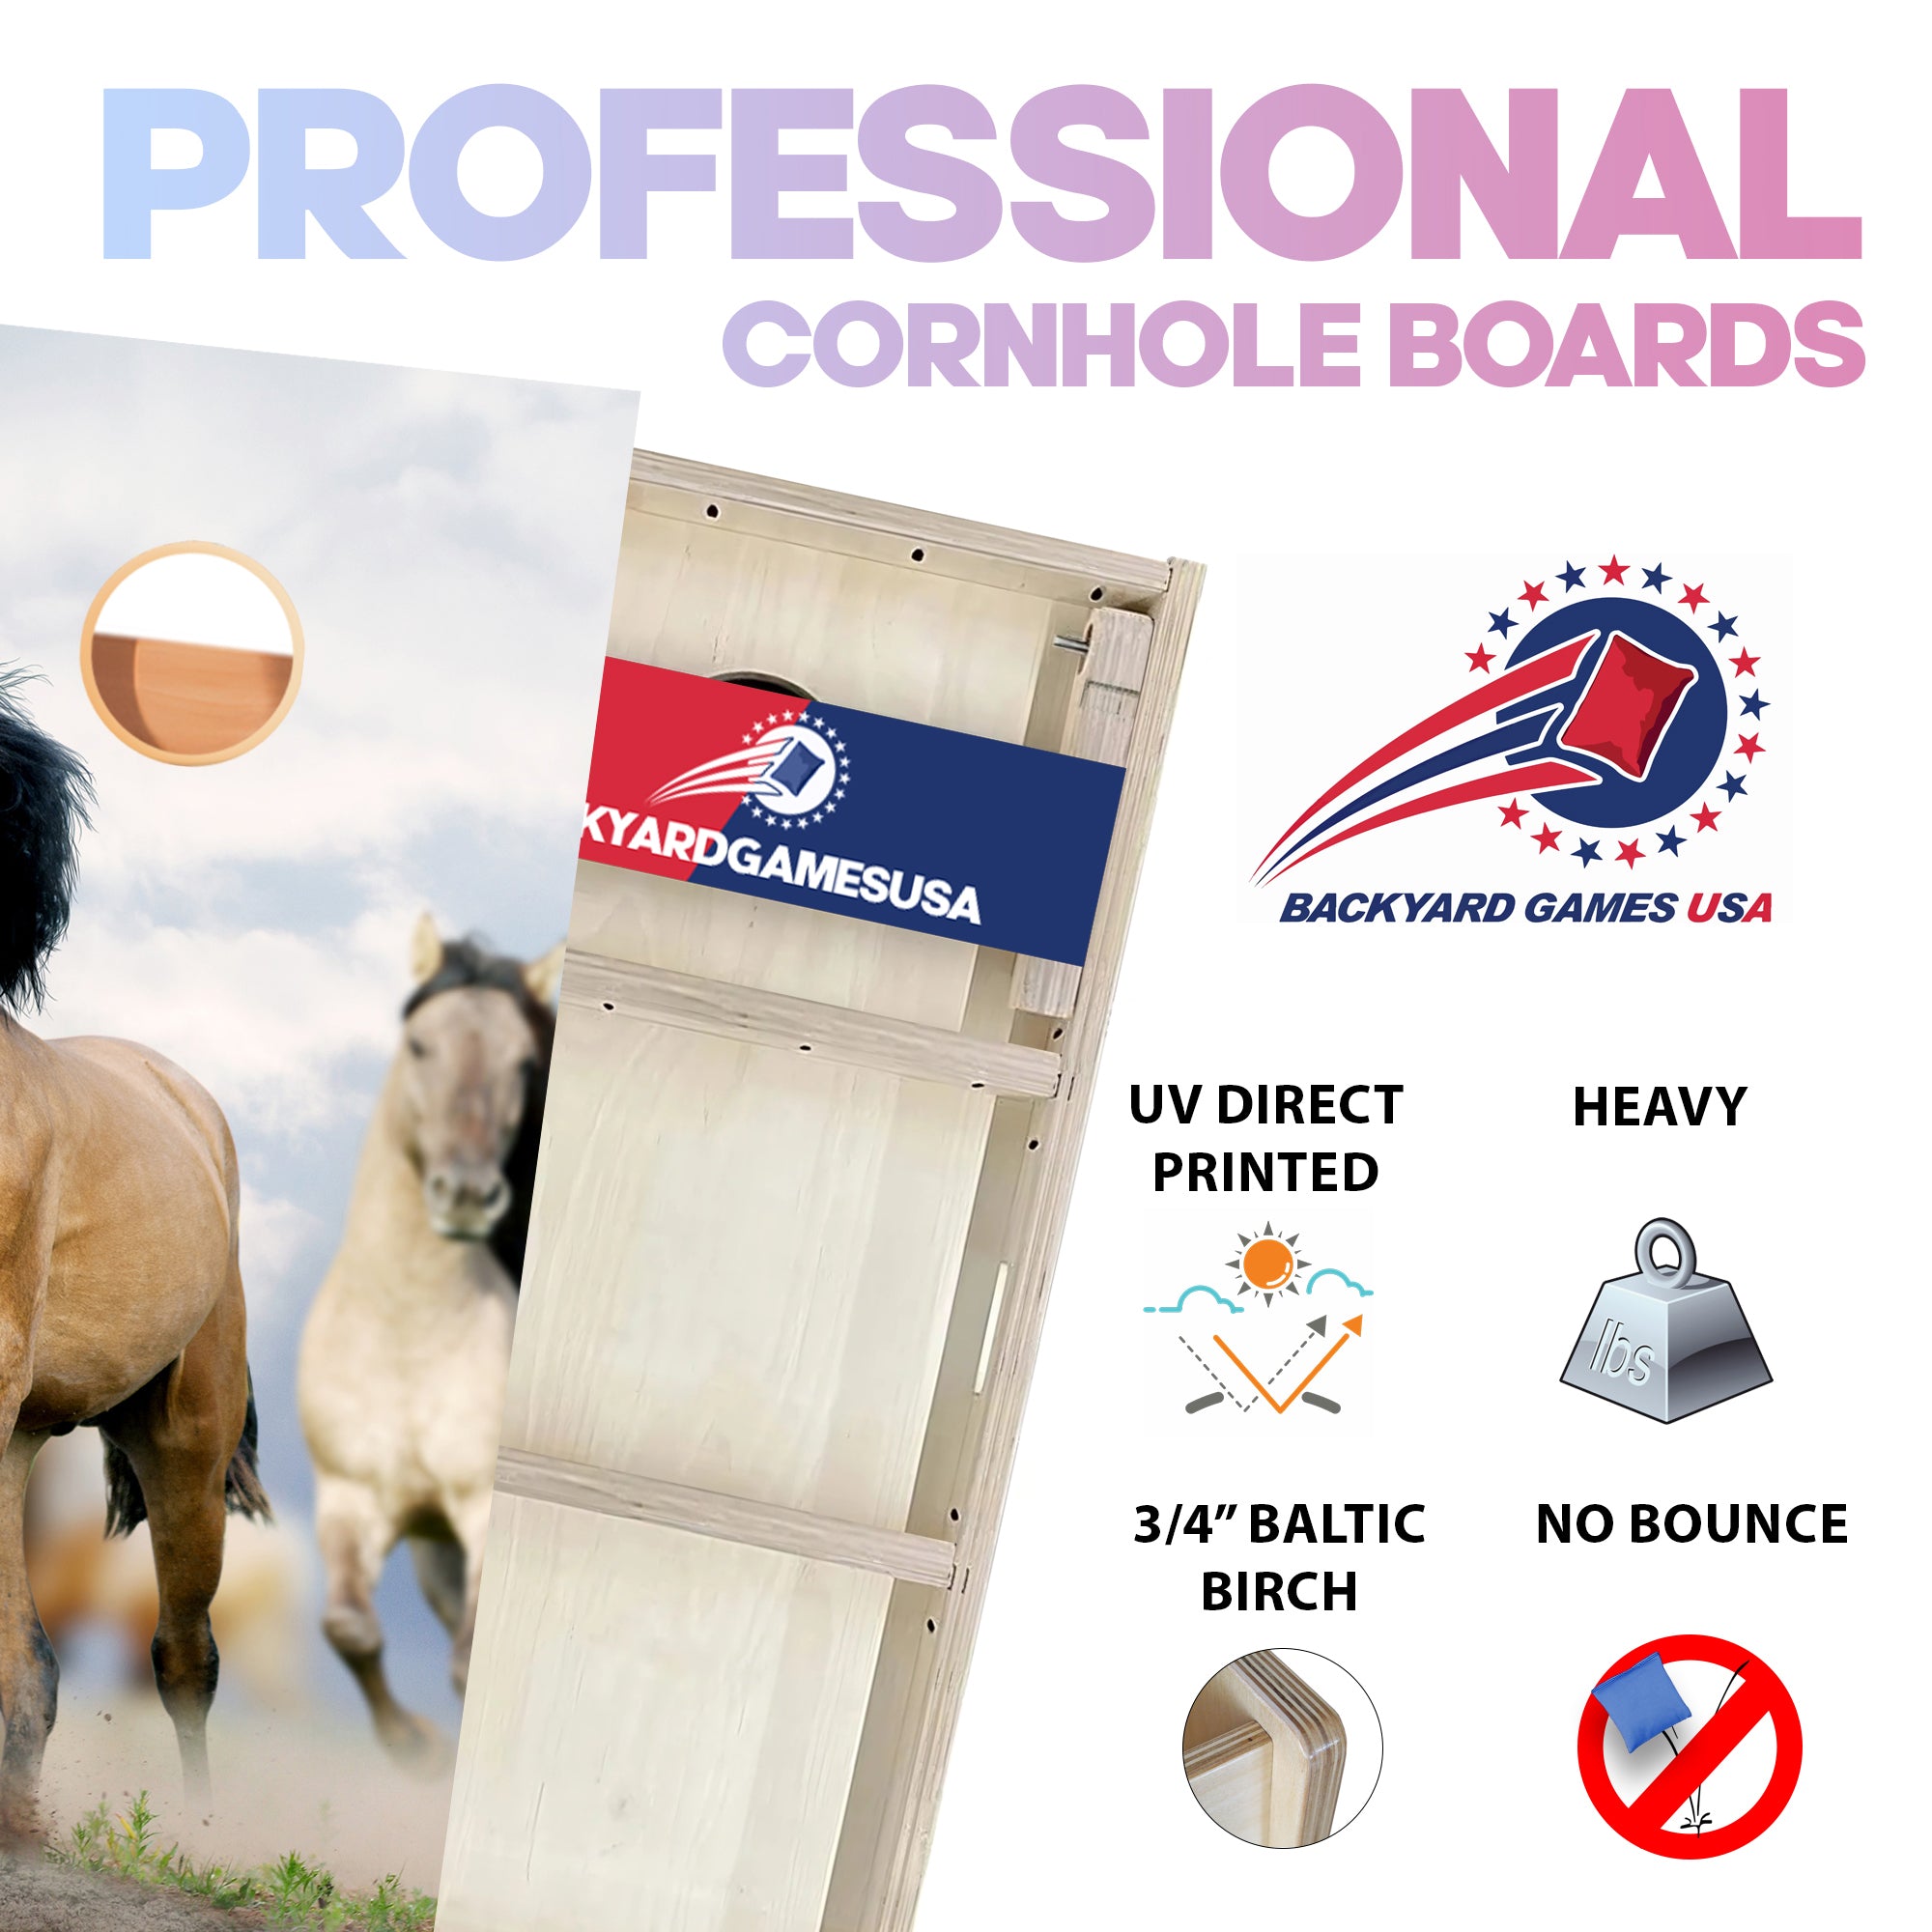 Horses Running Professional Cornhole Boards